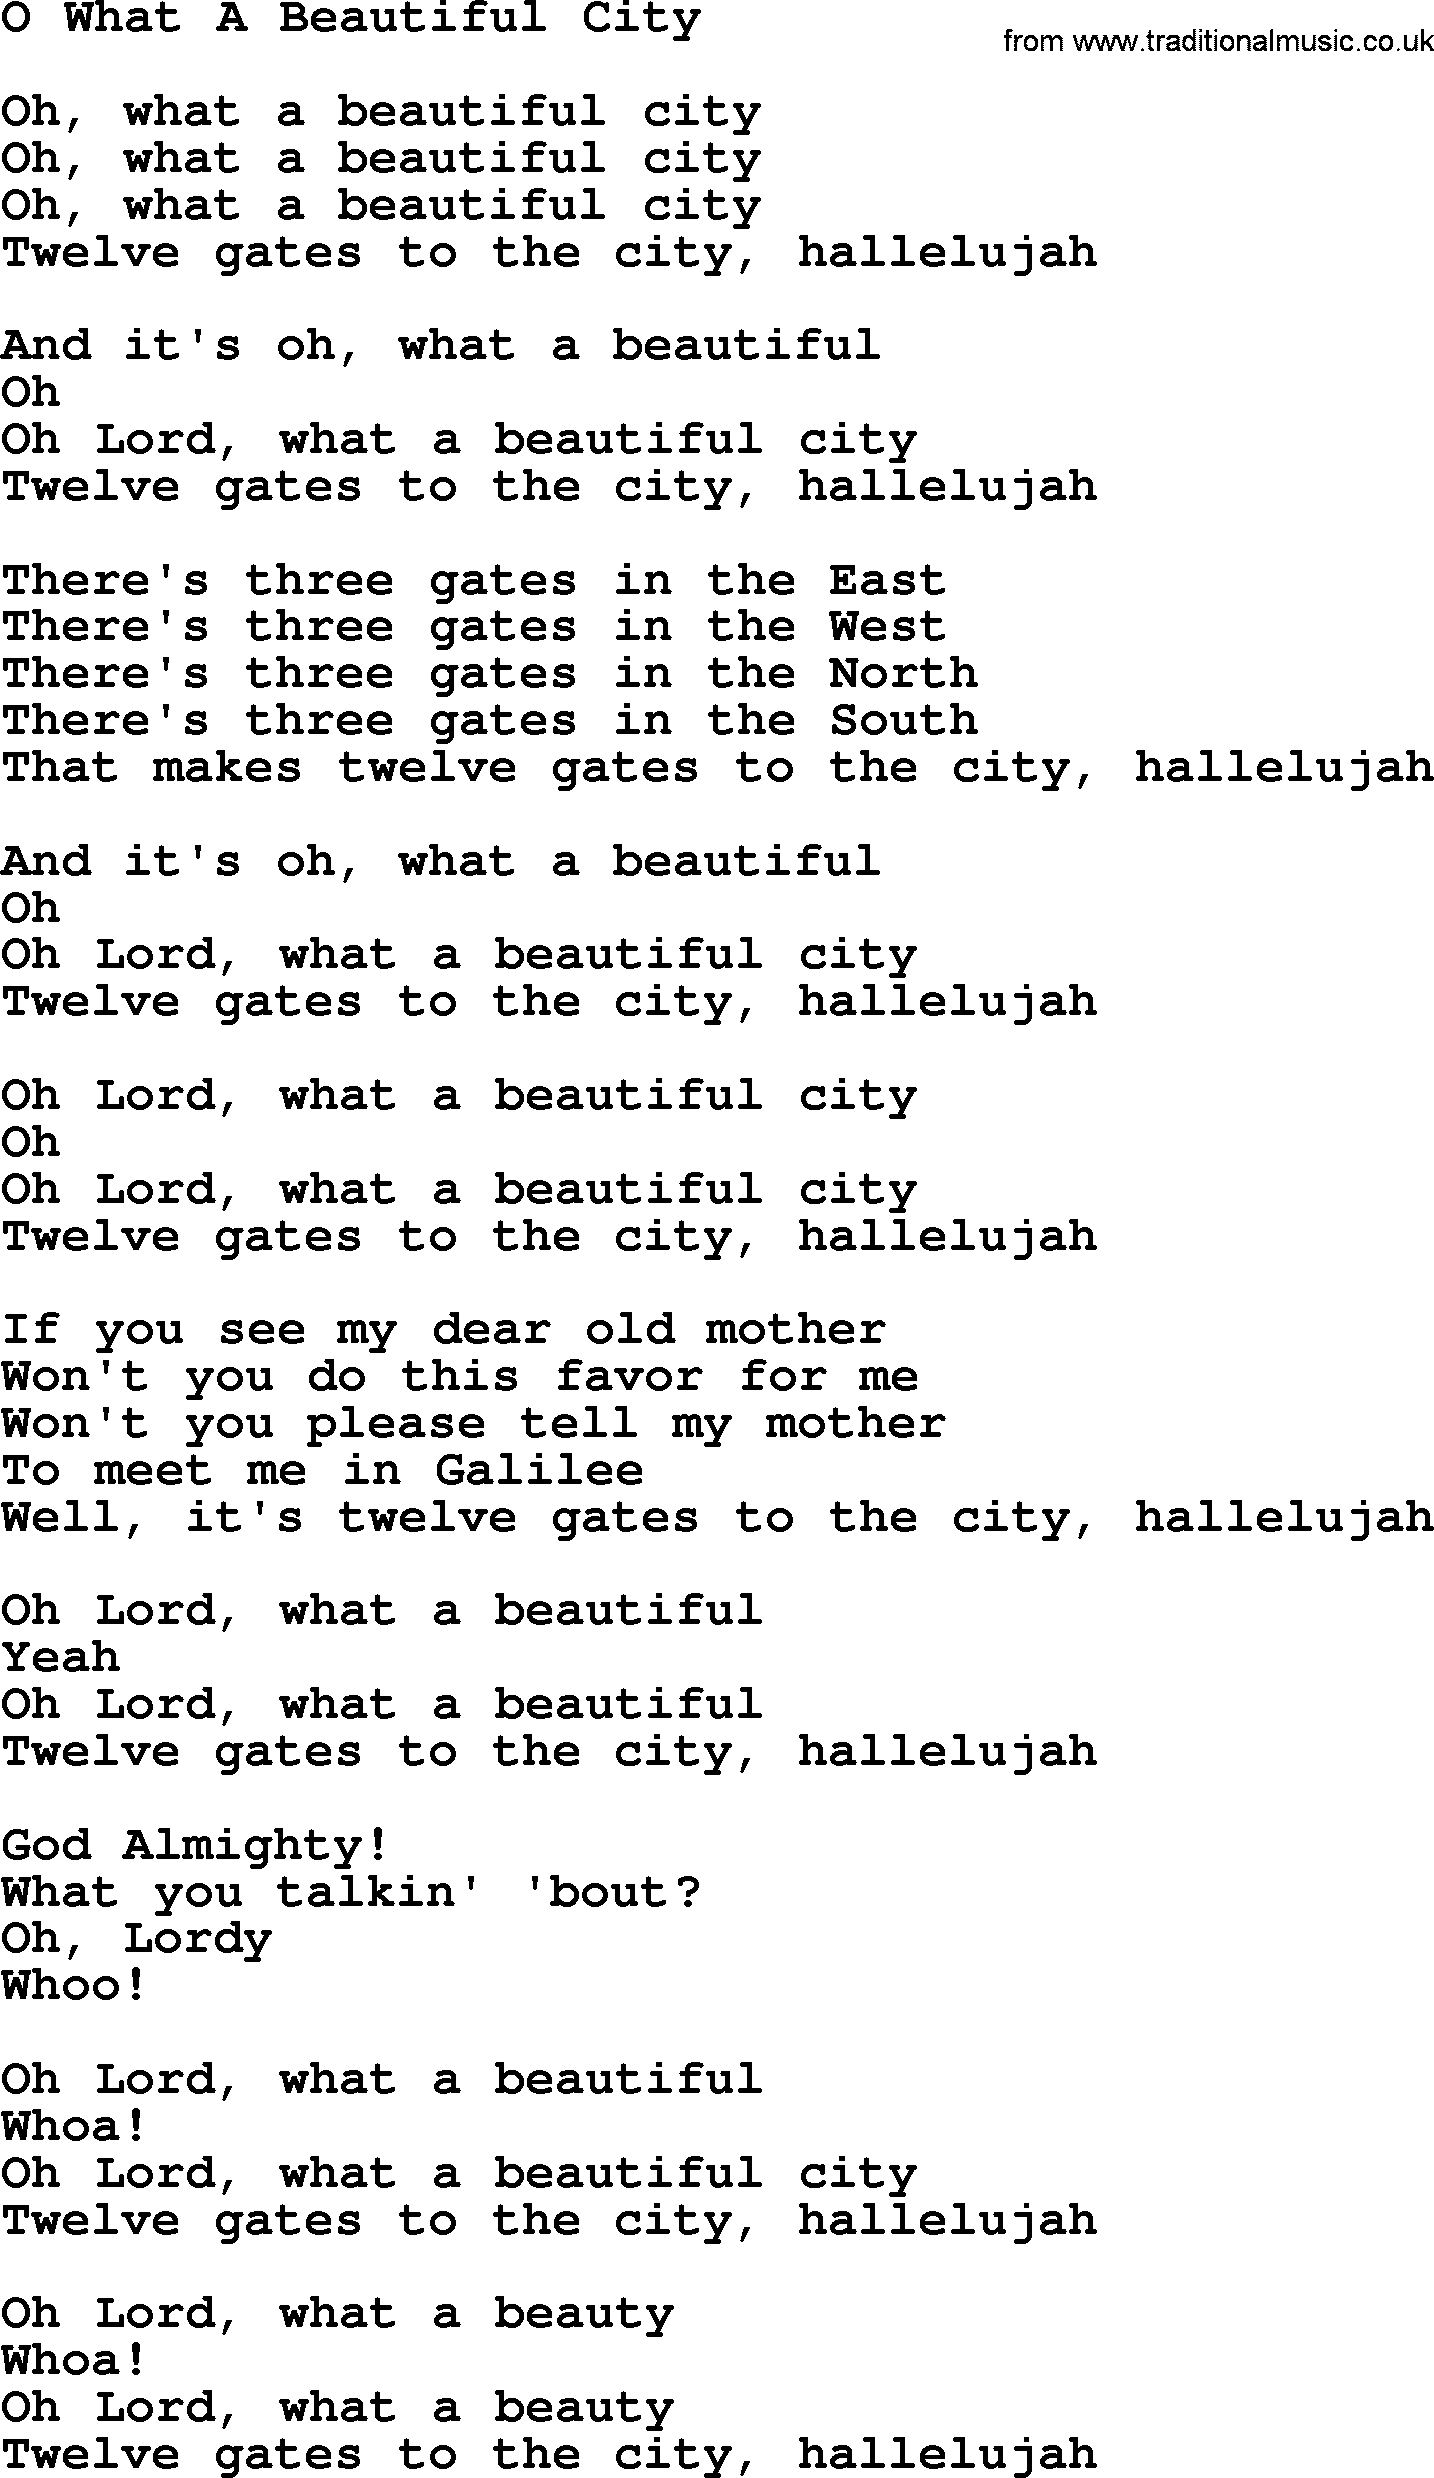 Joan Baez song O What A Beautiful City, lyrics